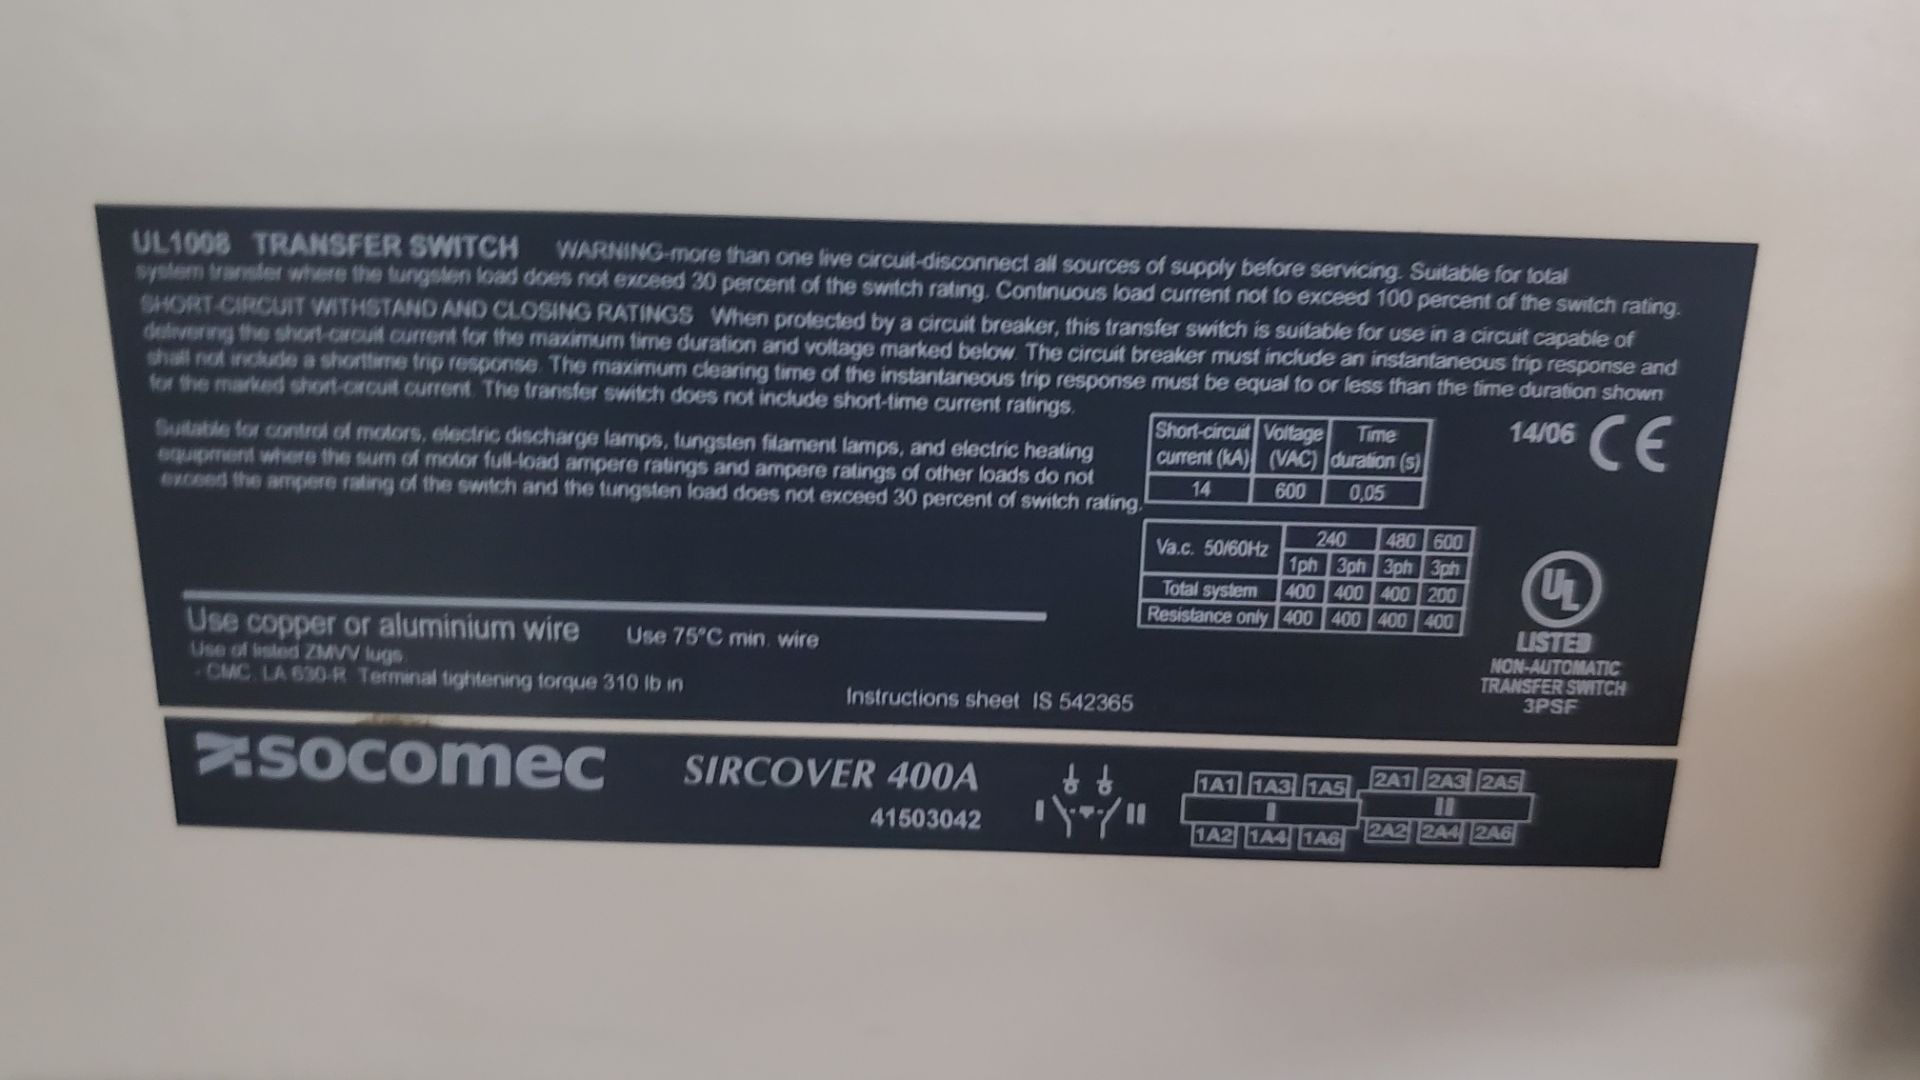 PCI Socomec 400A, 600V, 3 Phase, 4 Wire Manual Transfer Switch w/ Nema 3R Enclosure - Image 3 of 3